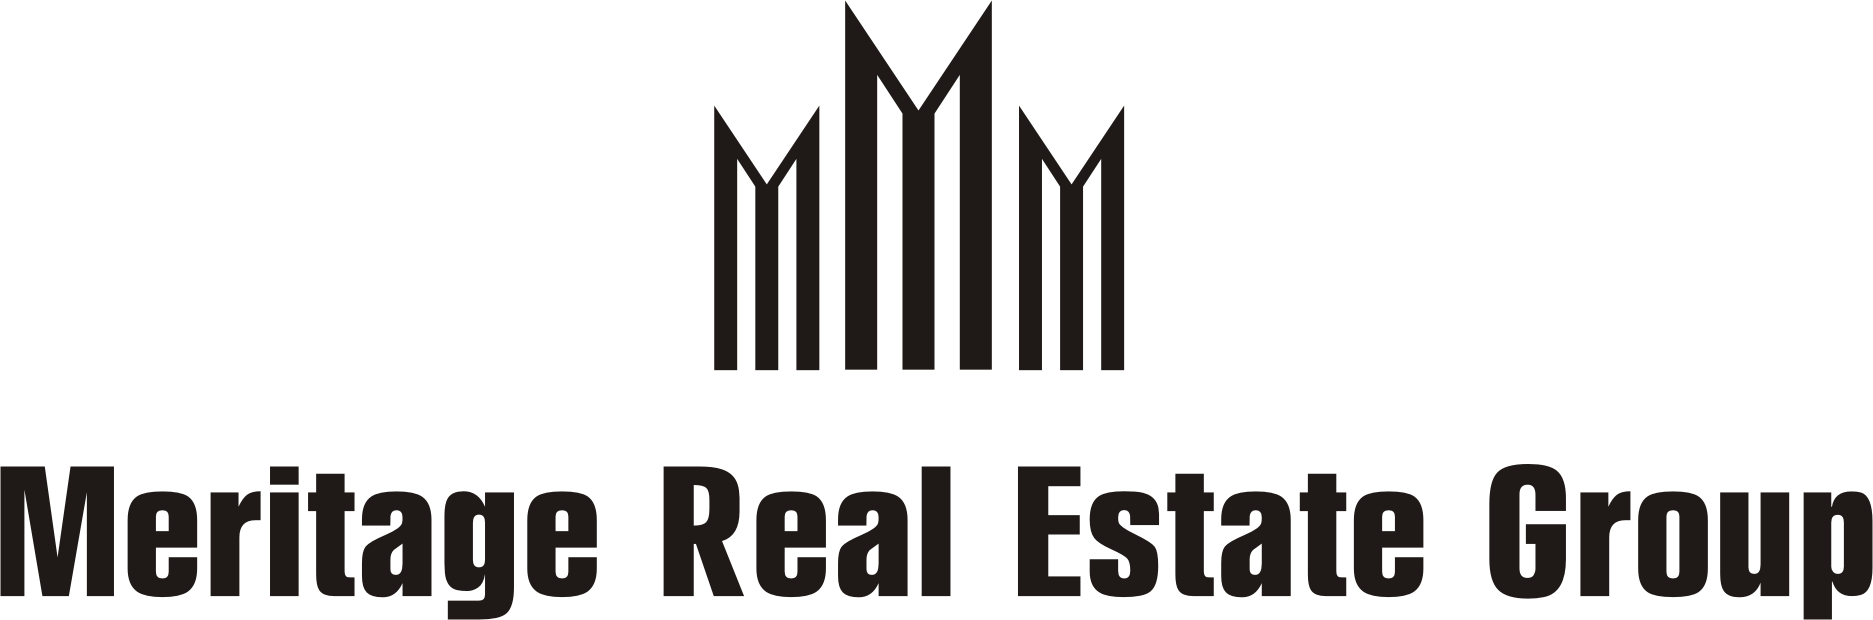 Meritage Real Estate Group